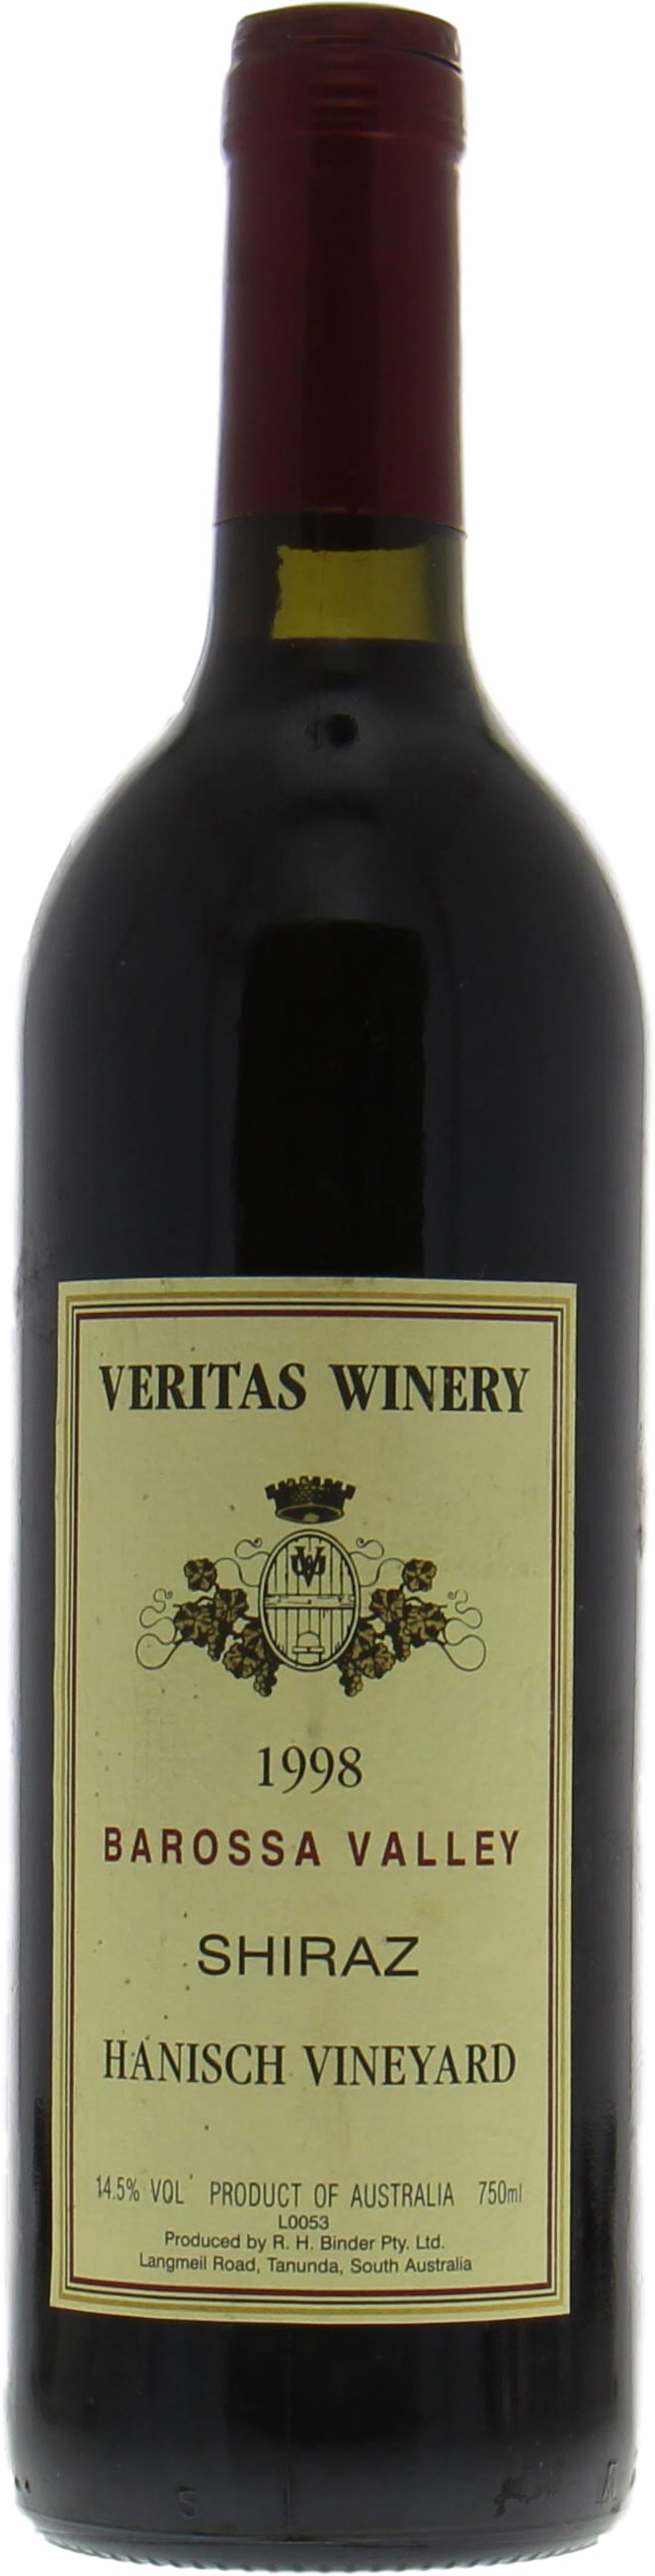 Veritas Winery - Hanisch Shiraz 1998 Perfect